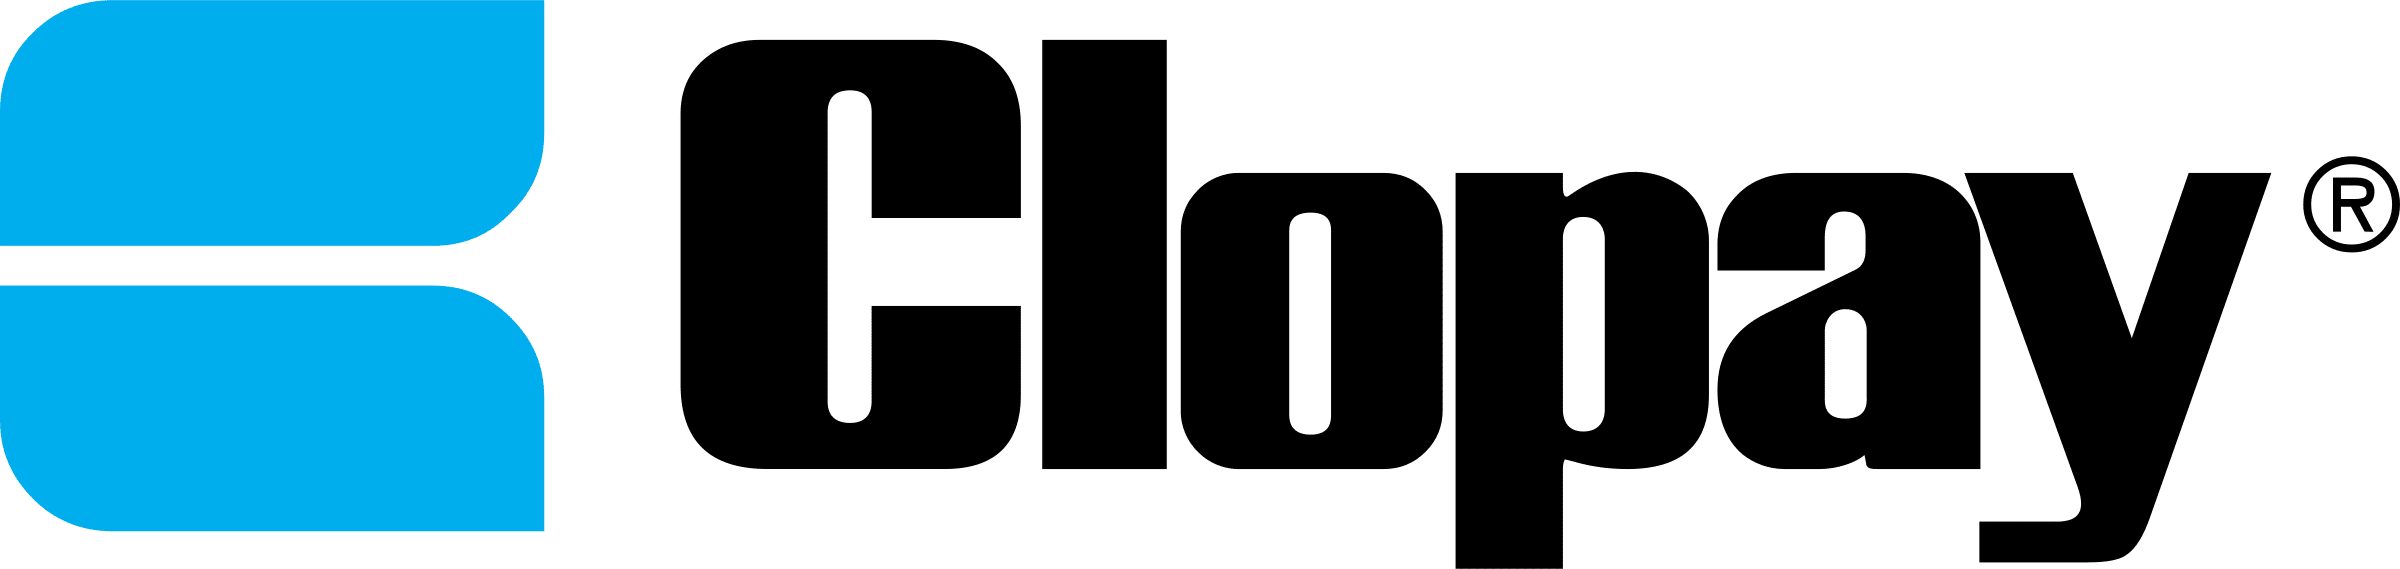 clopay-1-logo-png-transparent